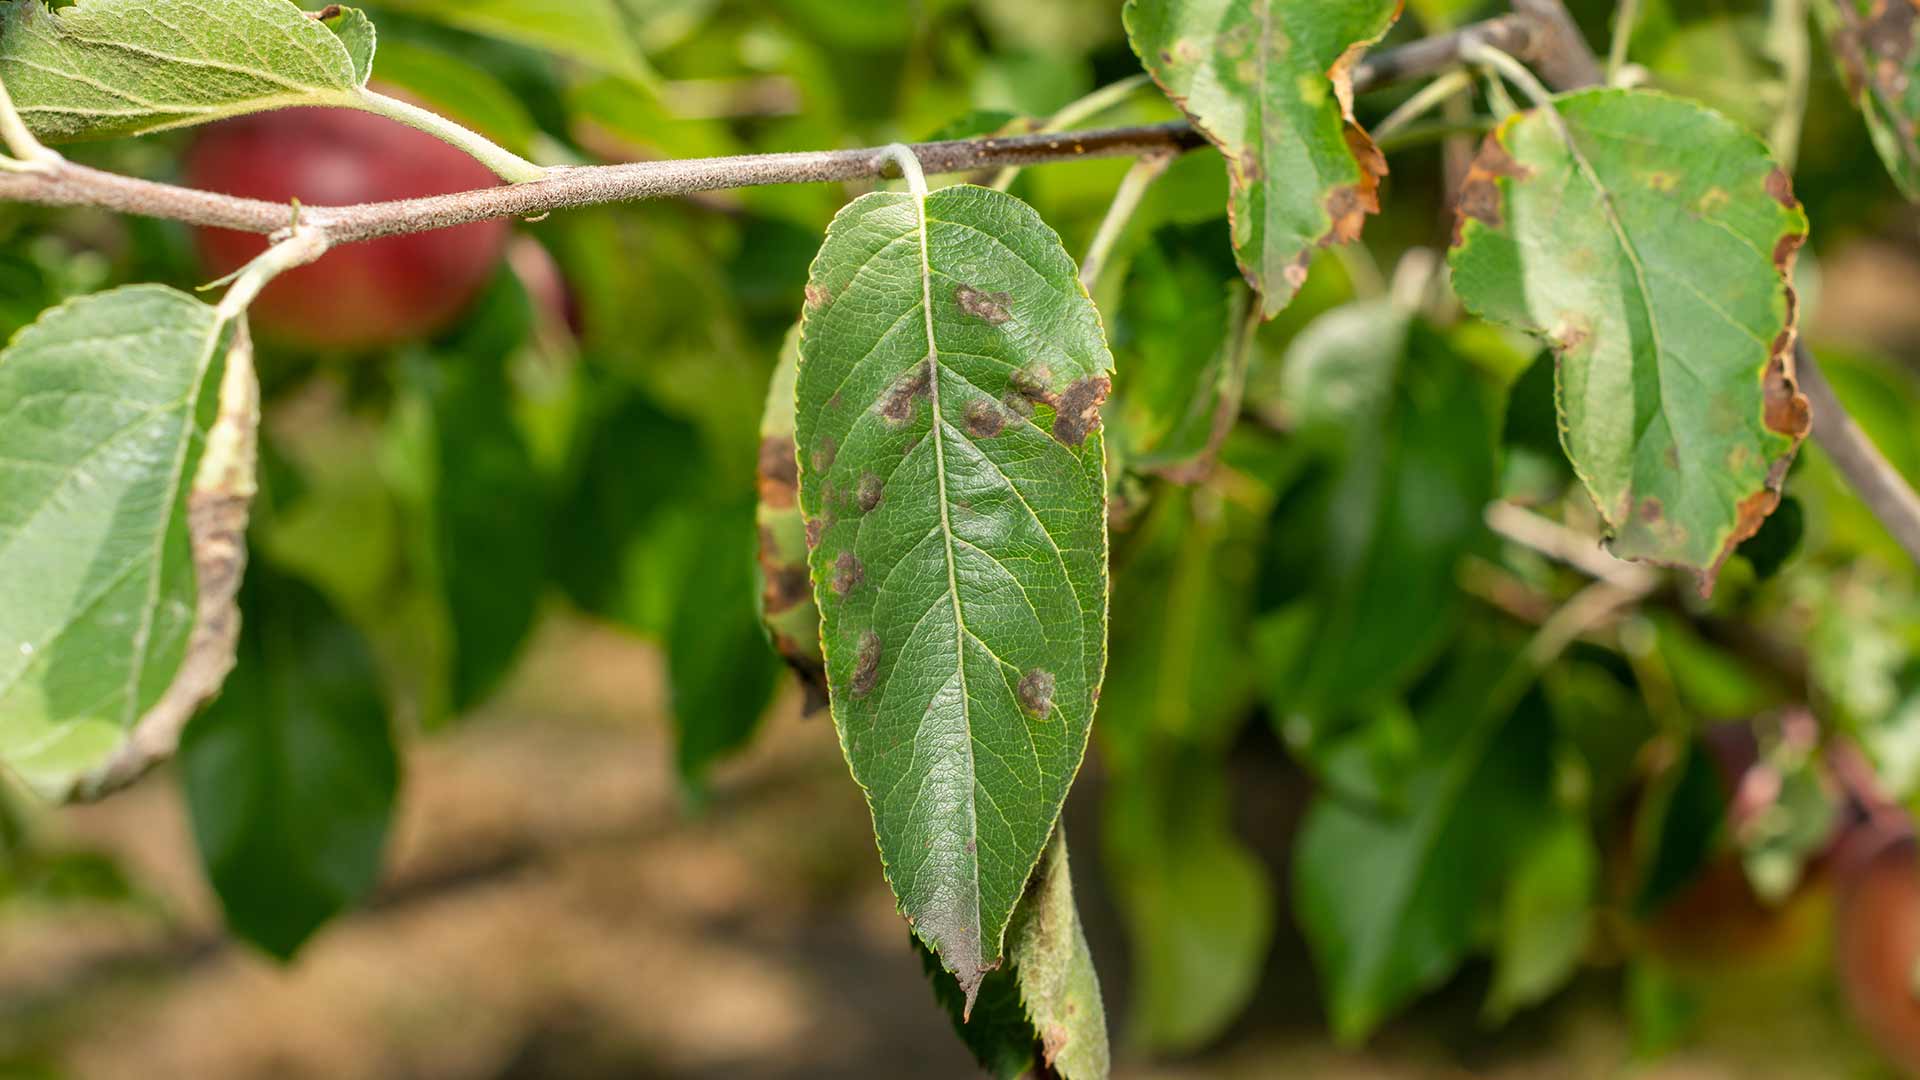 Apple scab tree disease spotted on leaves near Mansfield, Ohio.